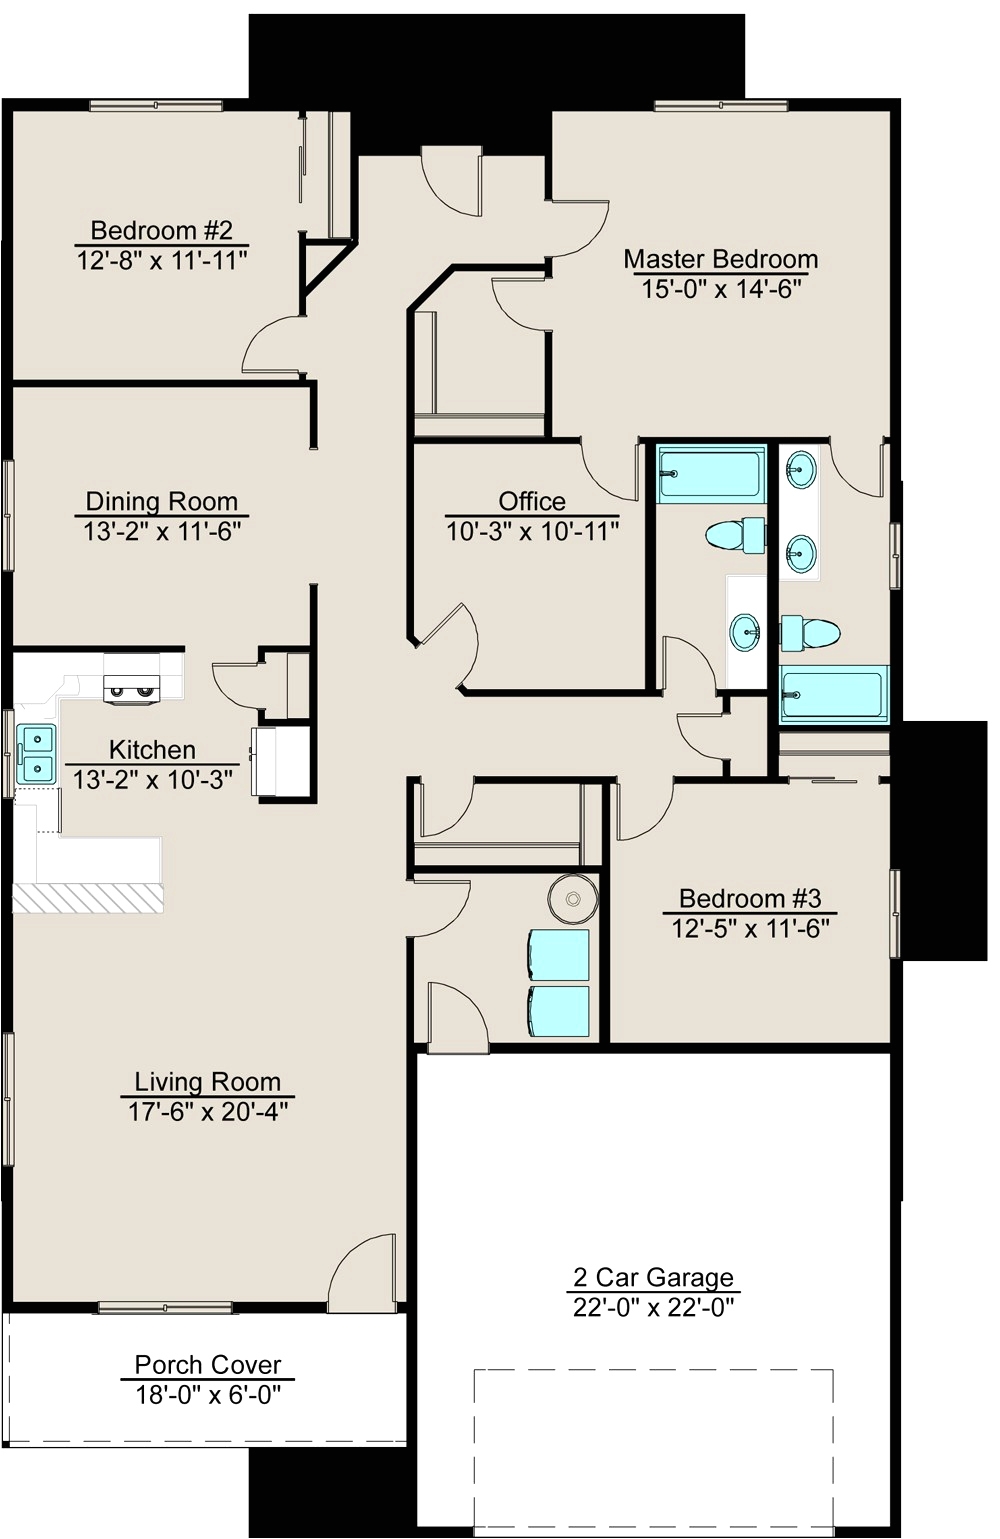 39 lovely image of 2 bedroom rv floor plans